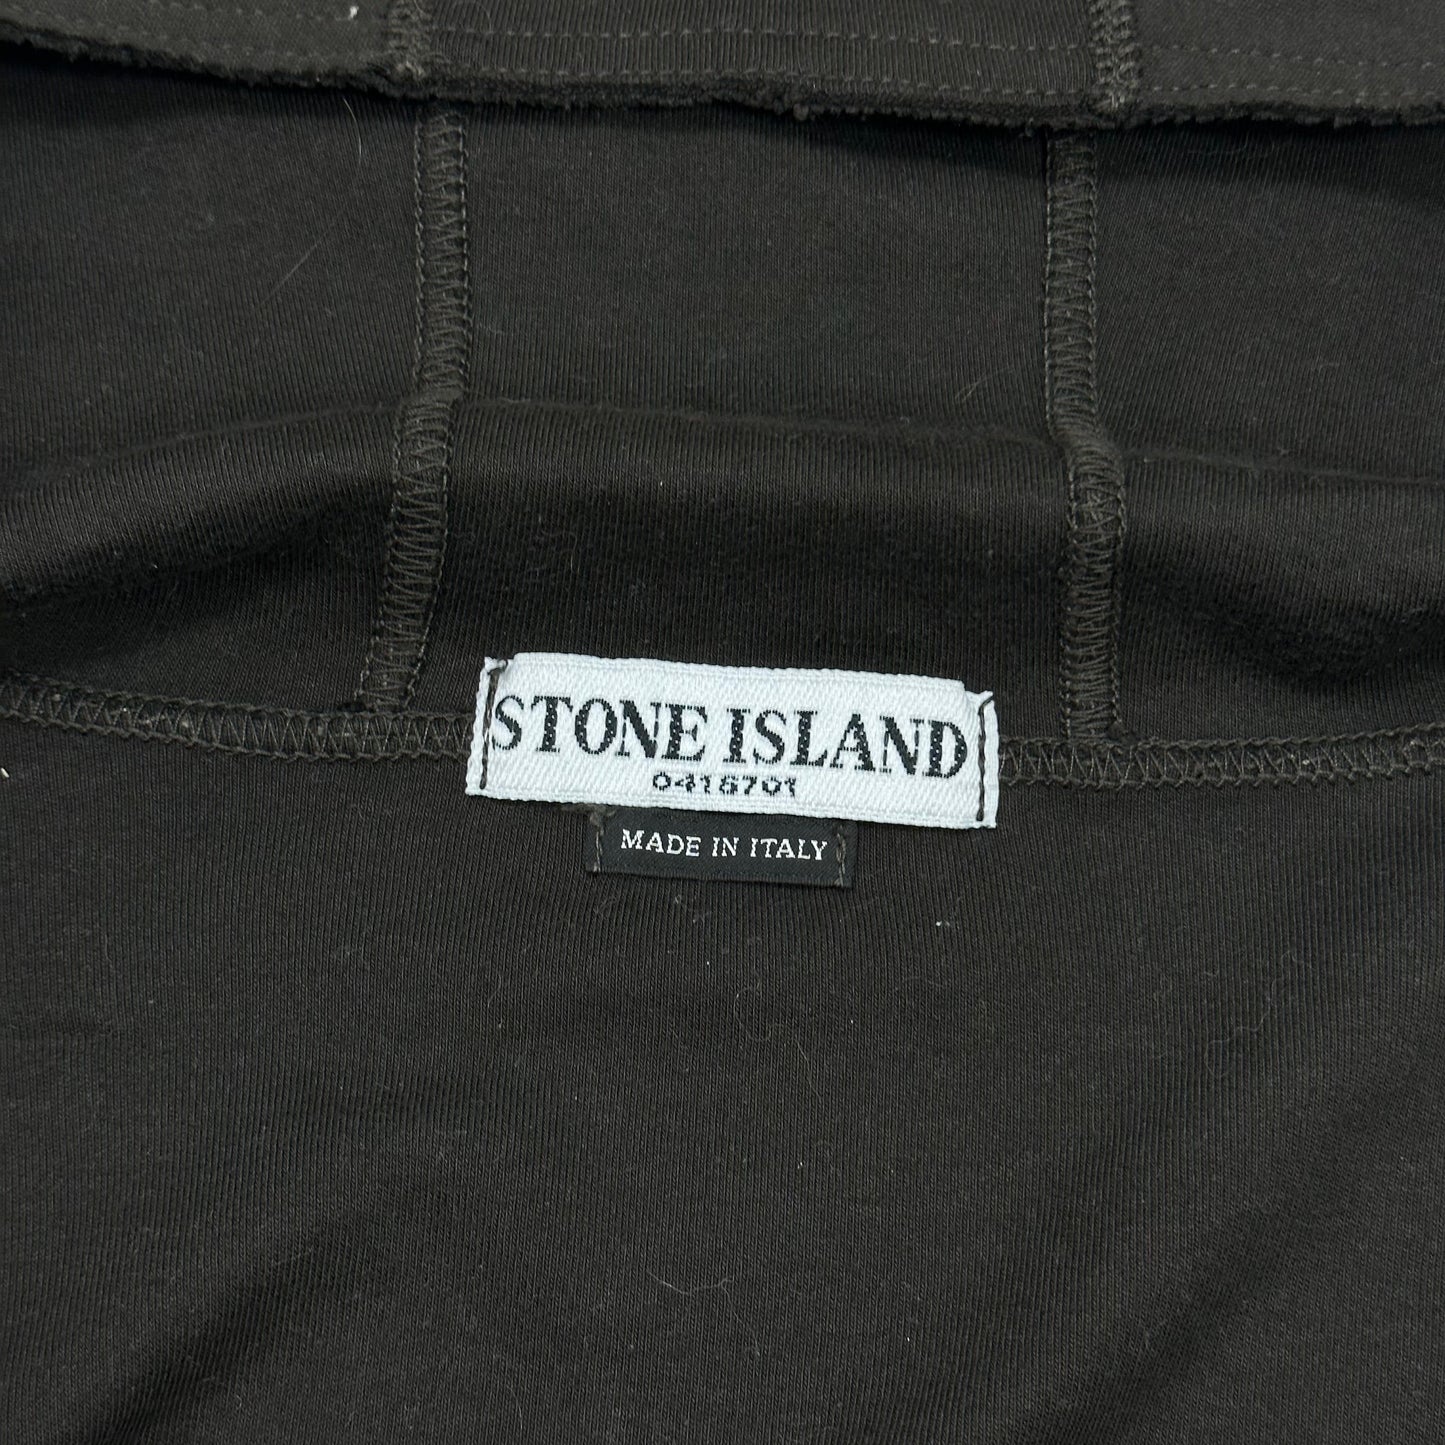 Stone Island SS08 Brown Overlocked Tech Hoodie - M